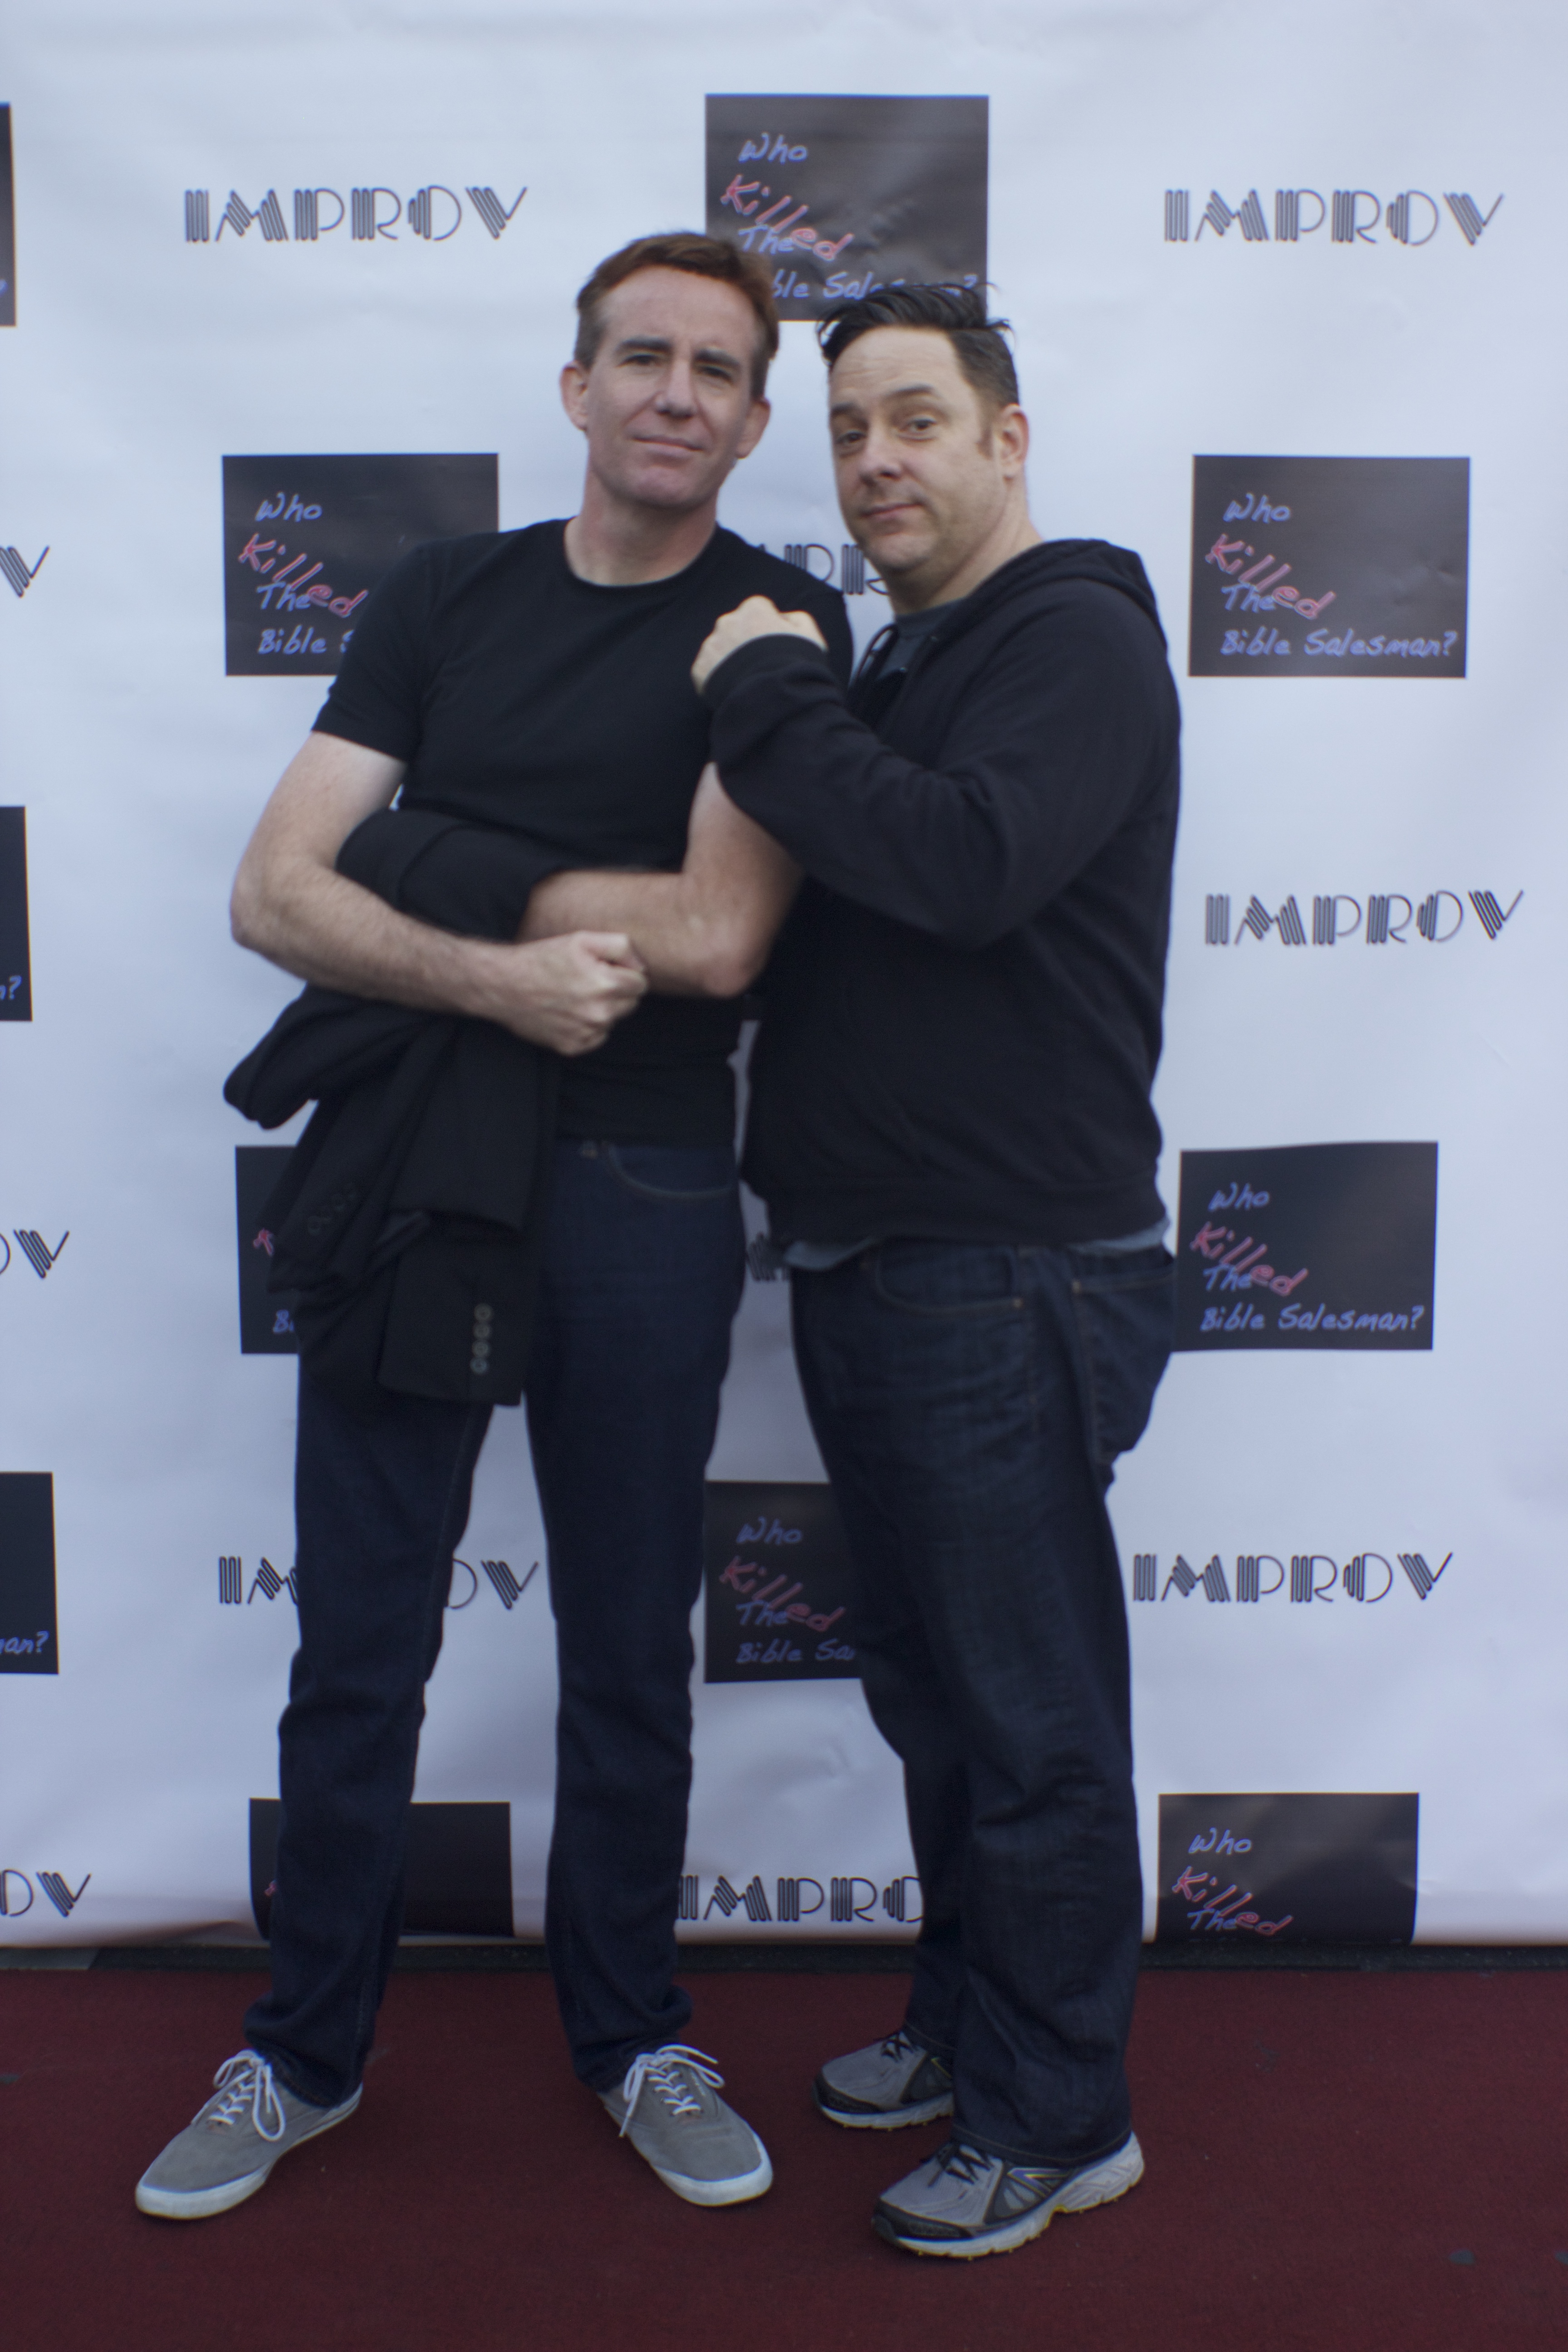 Danny McDermott and Jeff Richards from SNL